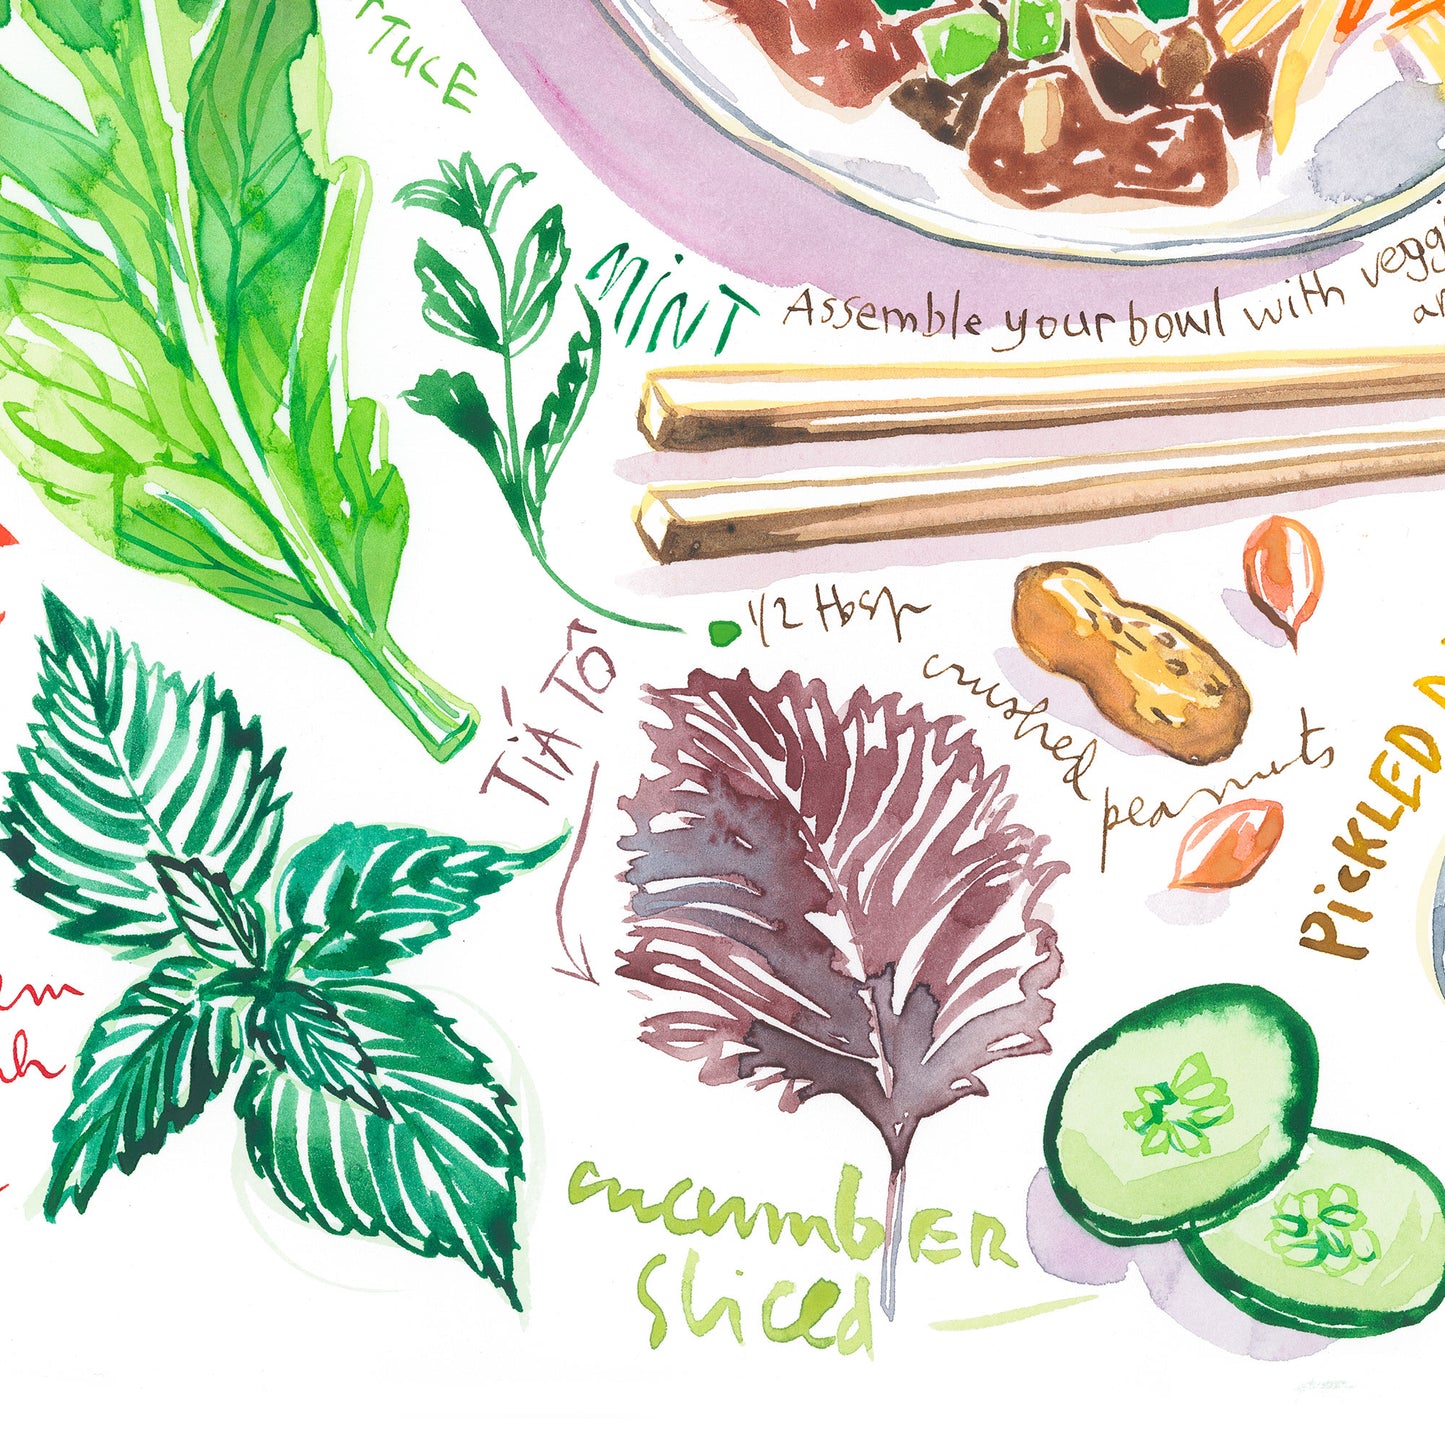 Vietnamese Rice Noodle Bowl recipe. Original watercolor painting